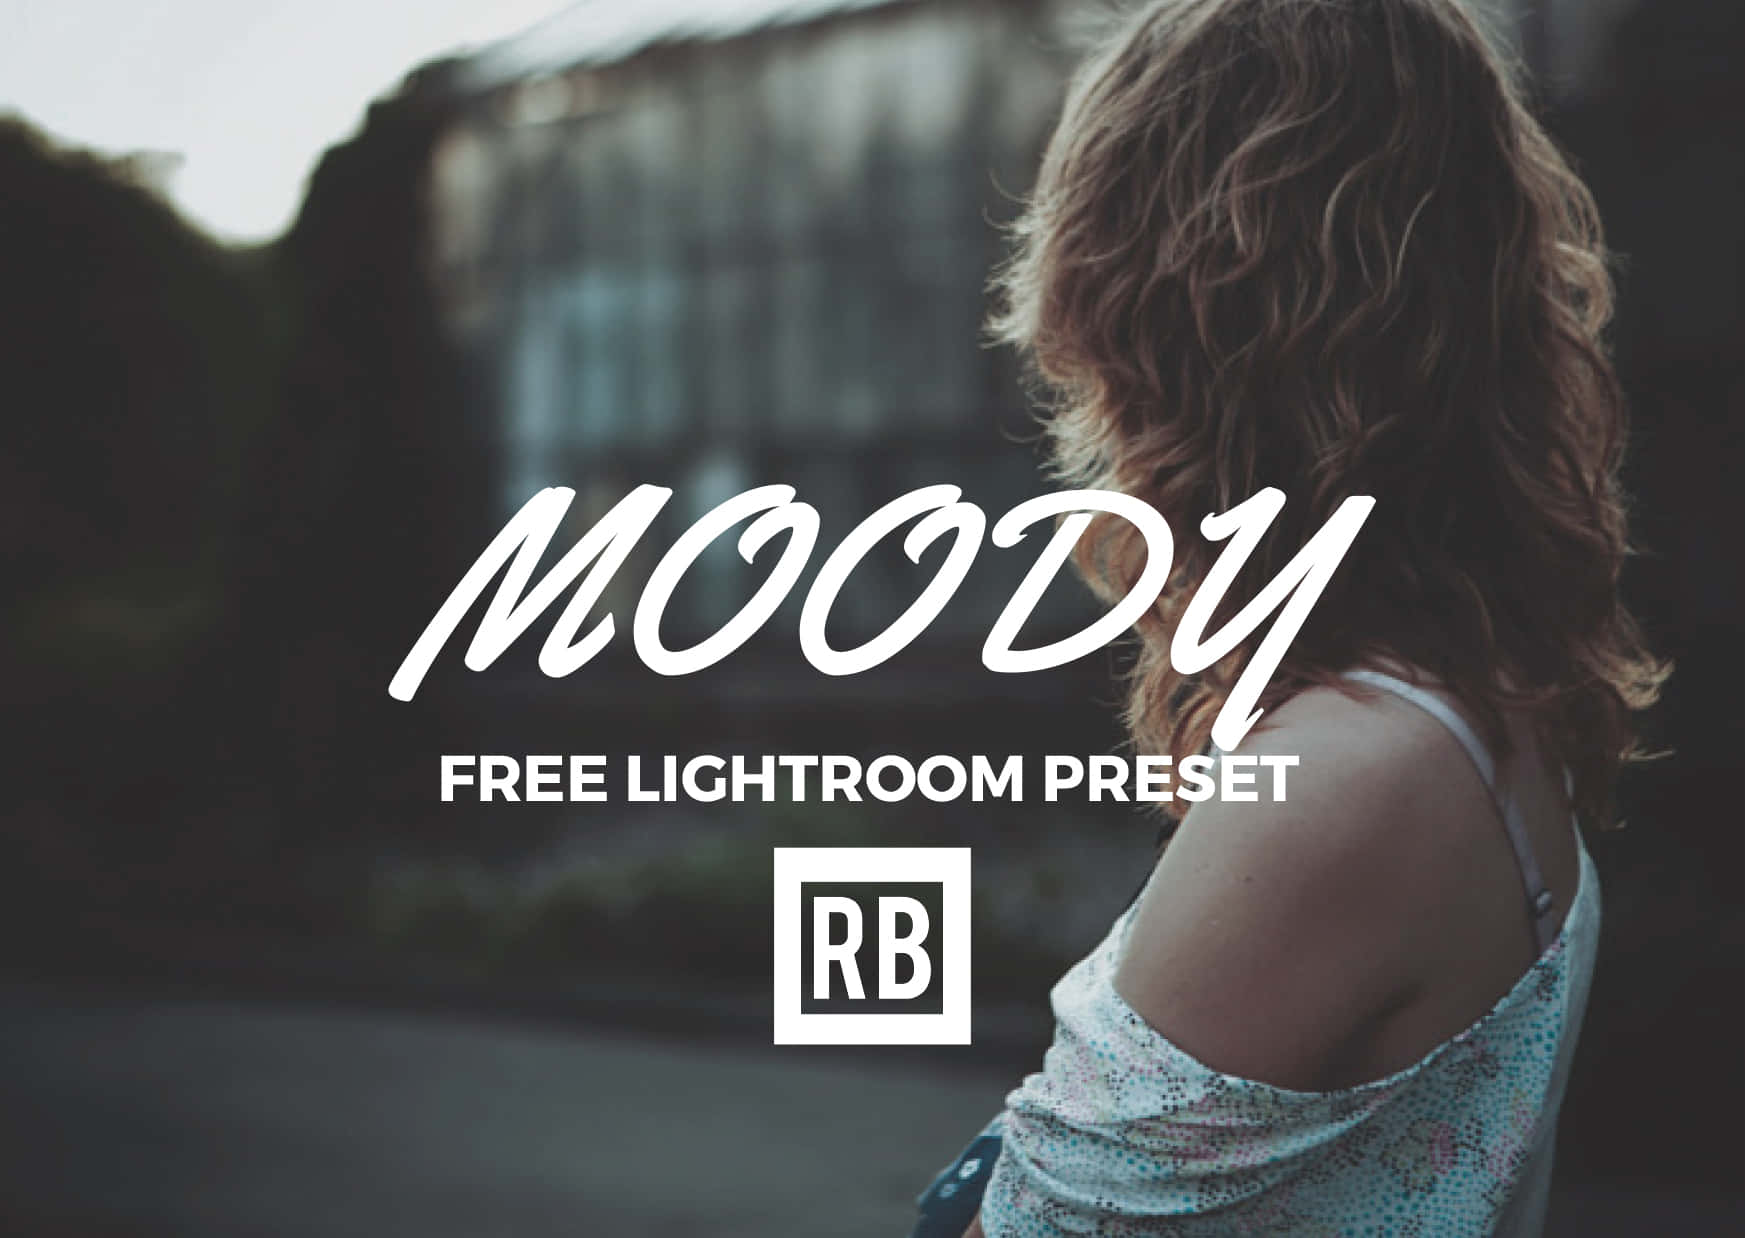 Moody Free Lightroom Preset